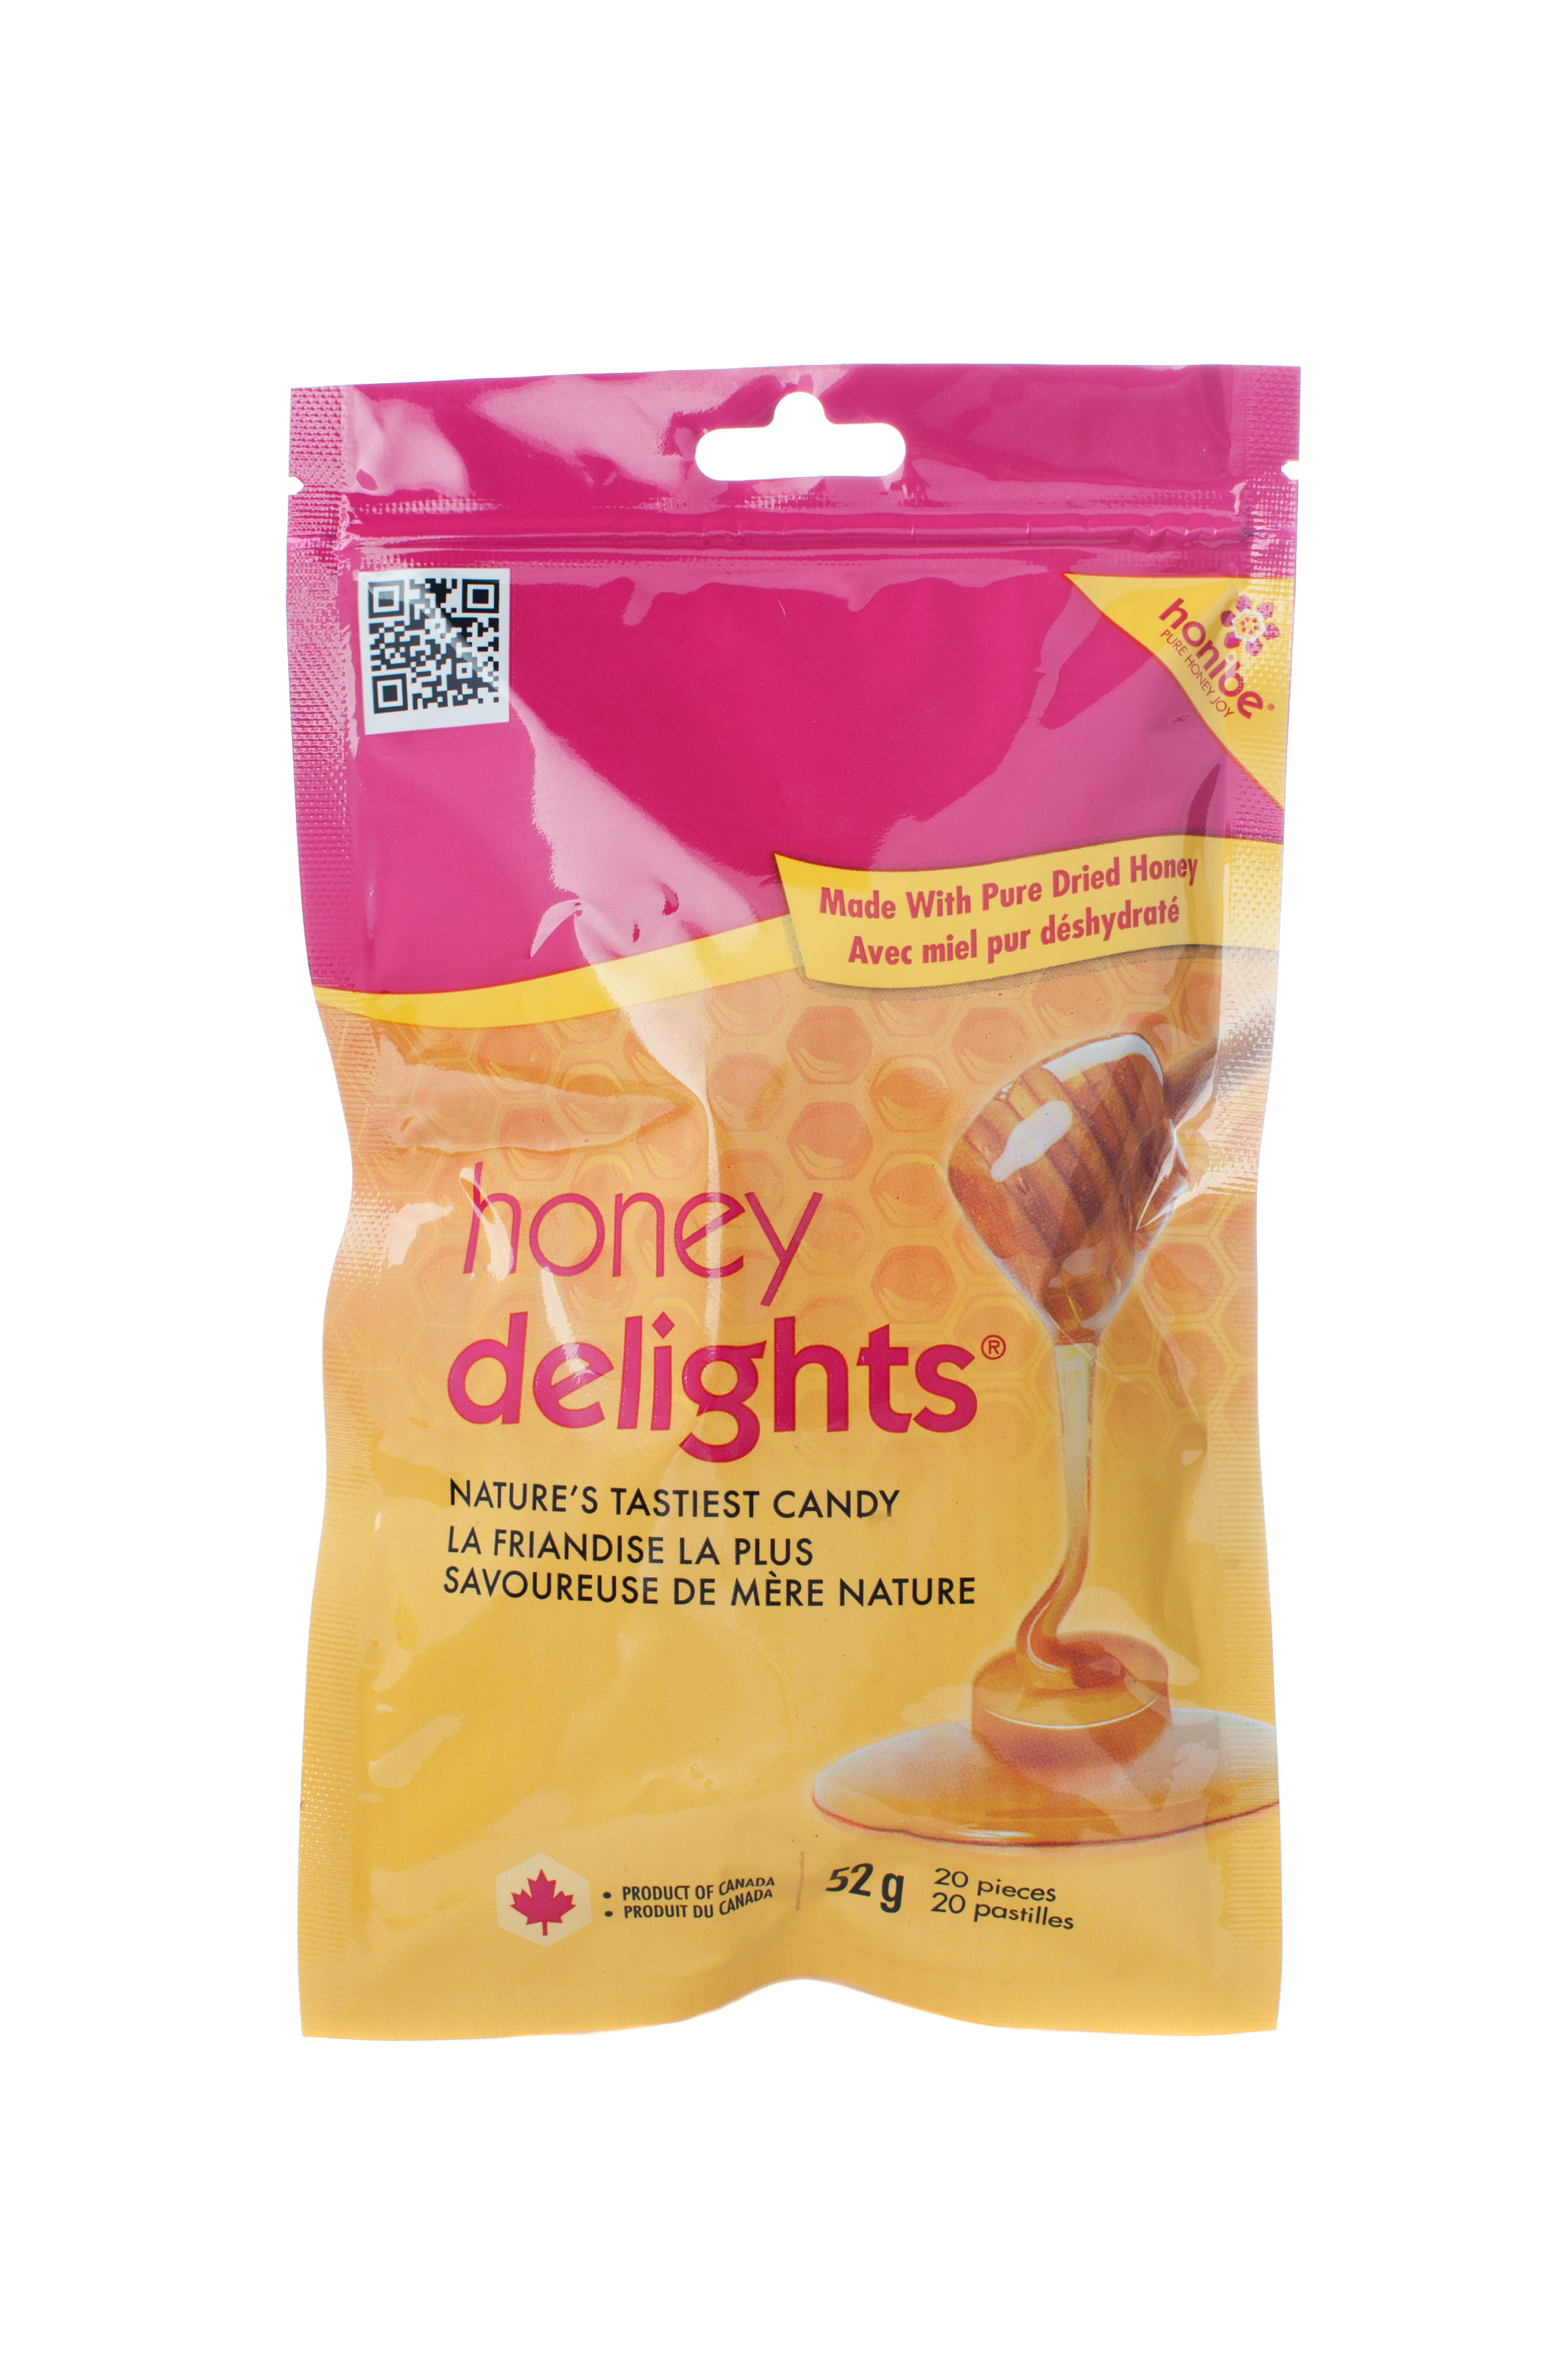 honey delights